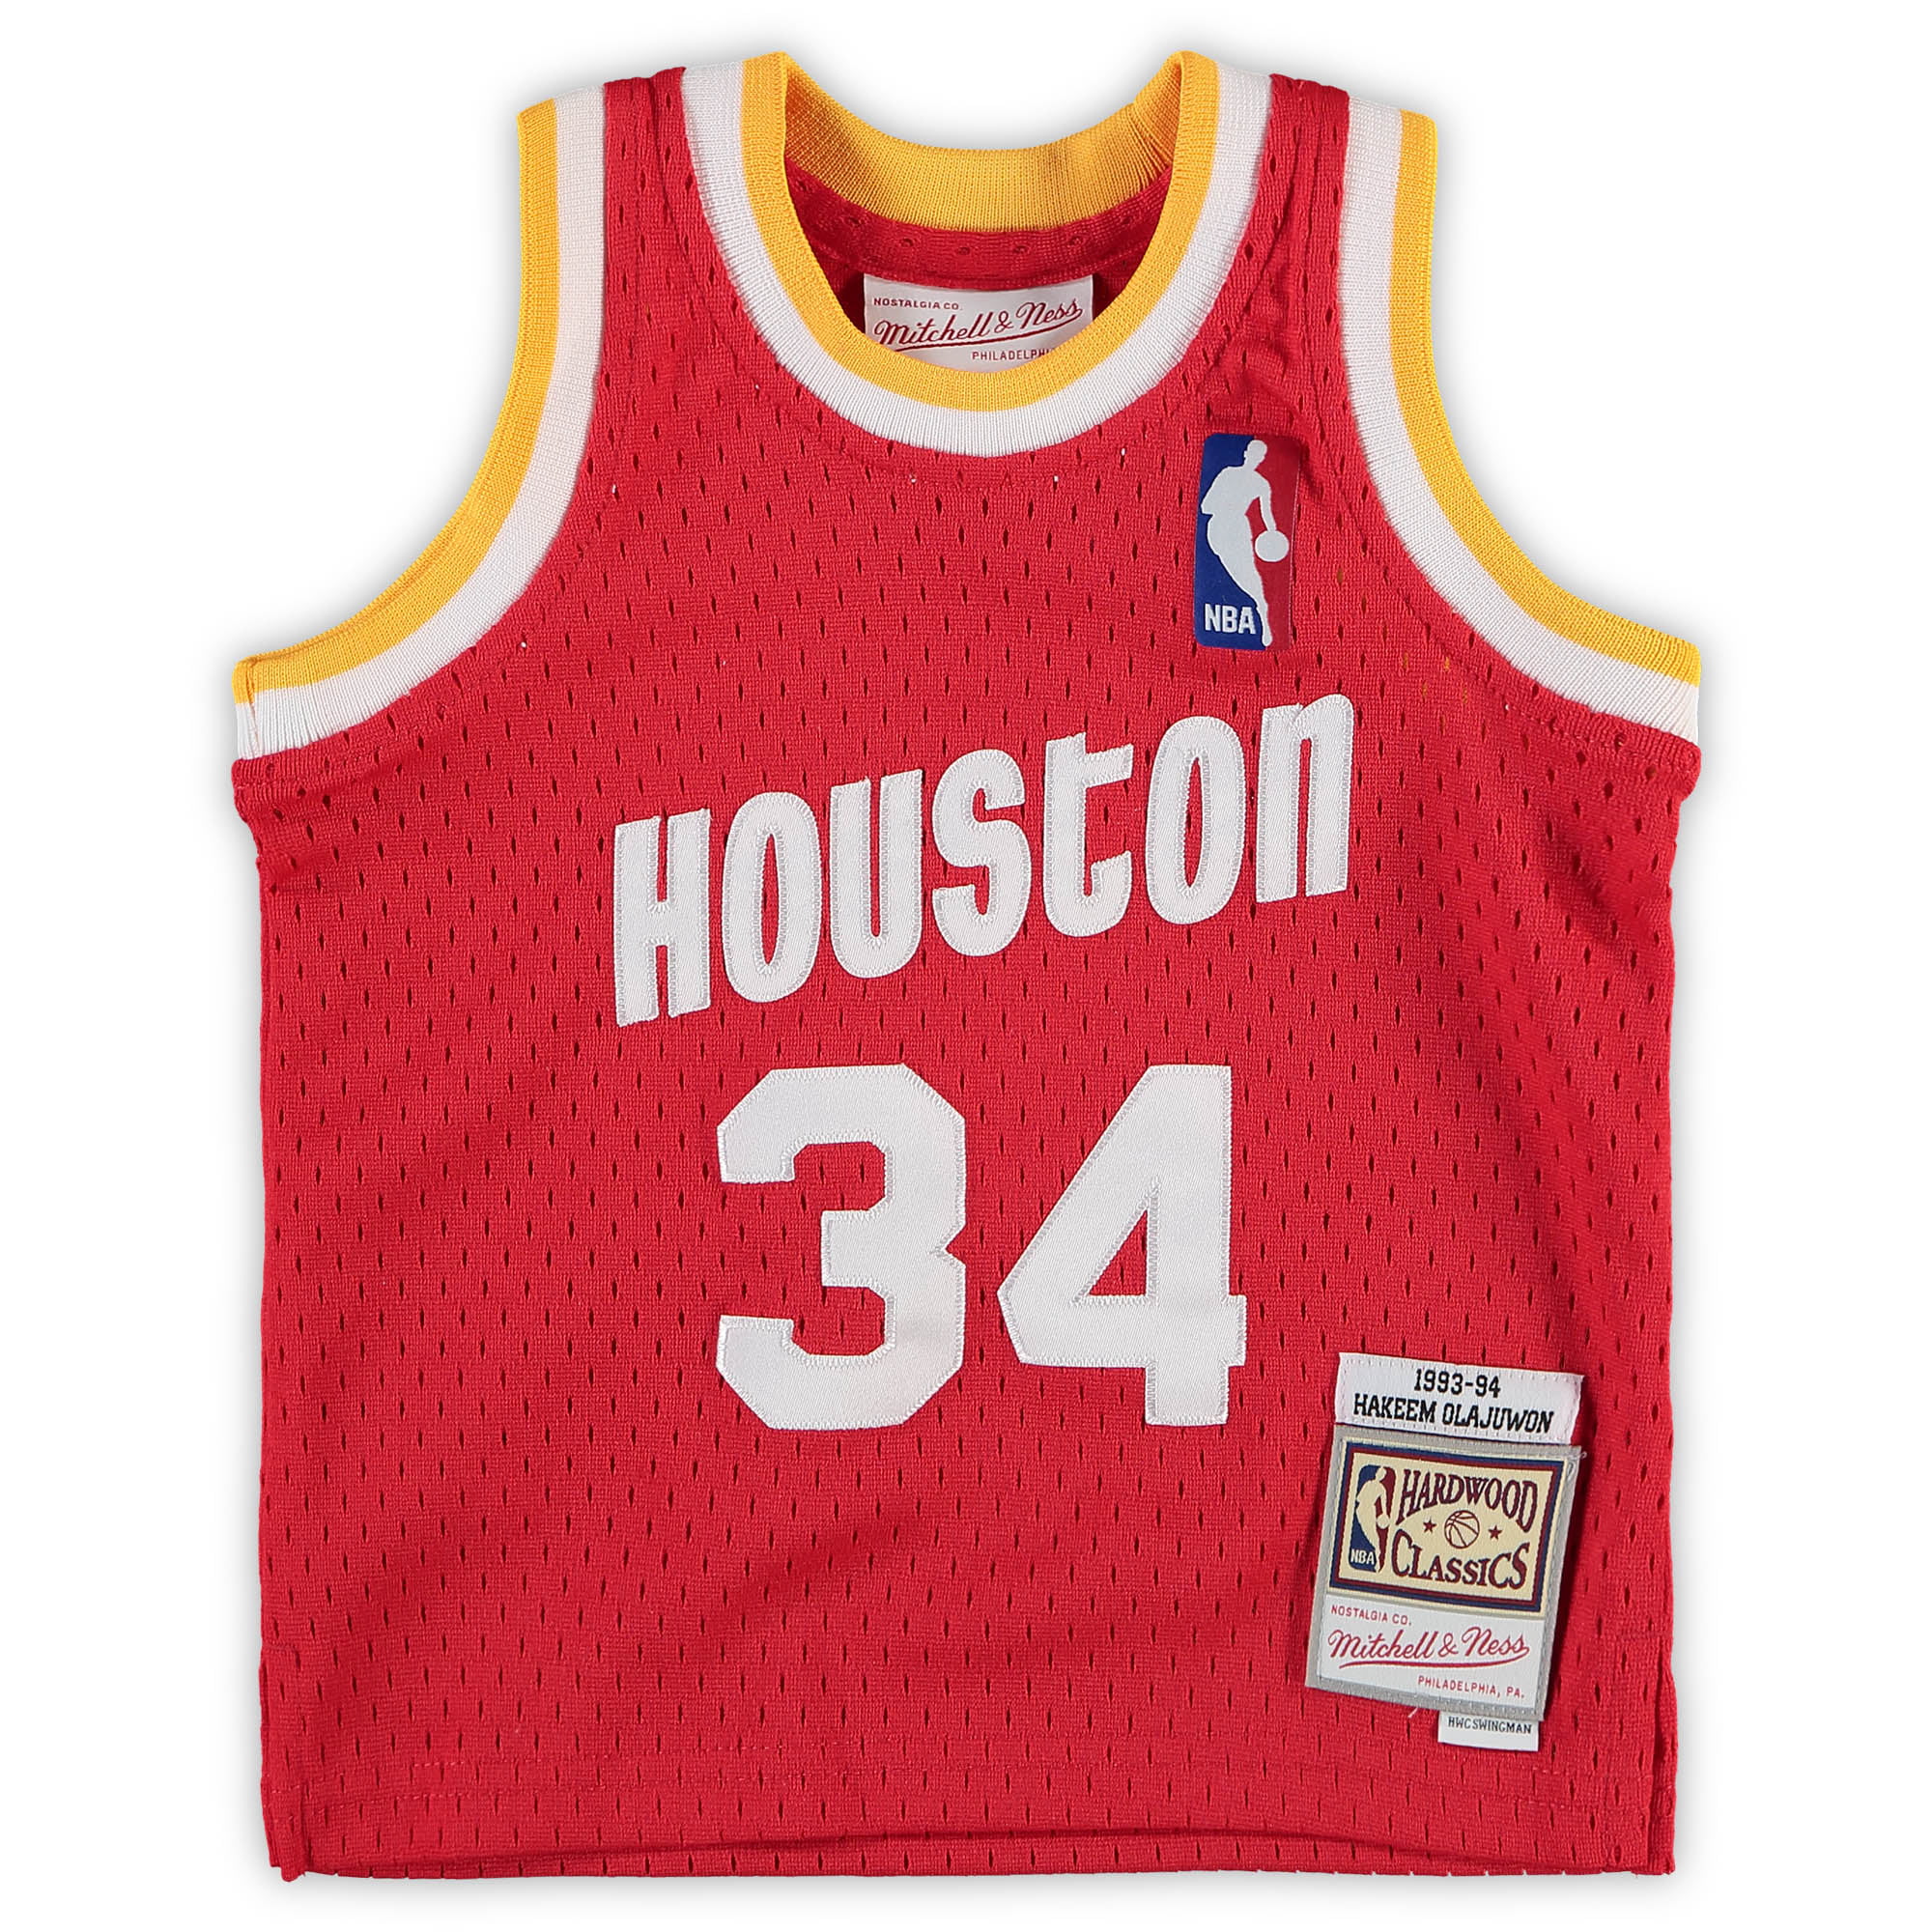 Houston Rockets 1994-1995 Champions Team Autographed Jersey - Olajuwon,  Drexler & More